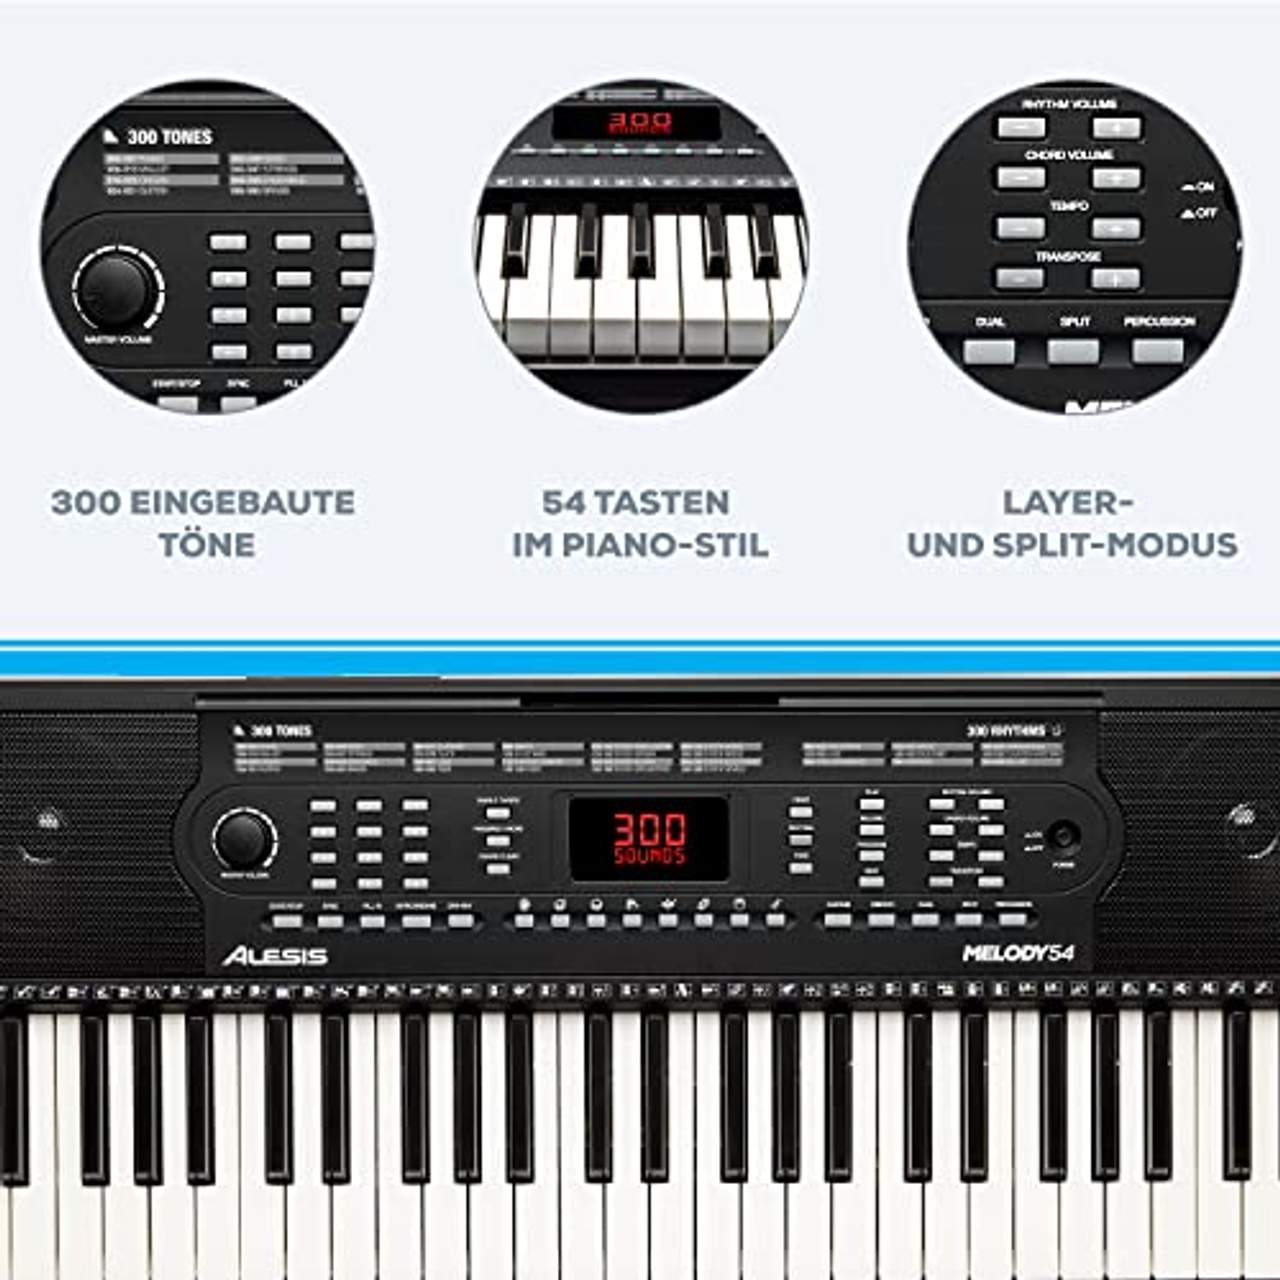 Alesis Melody 54 Tragbares 54-Tasten Keyboard